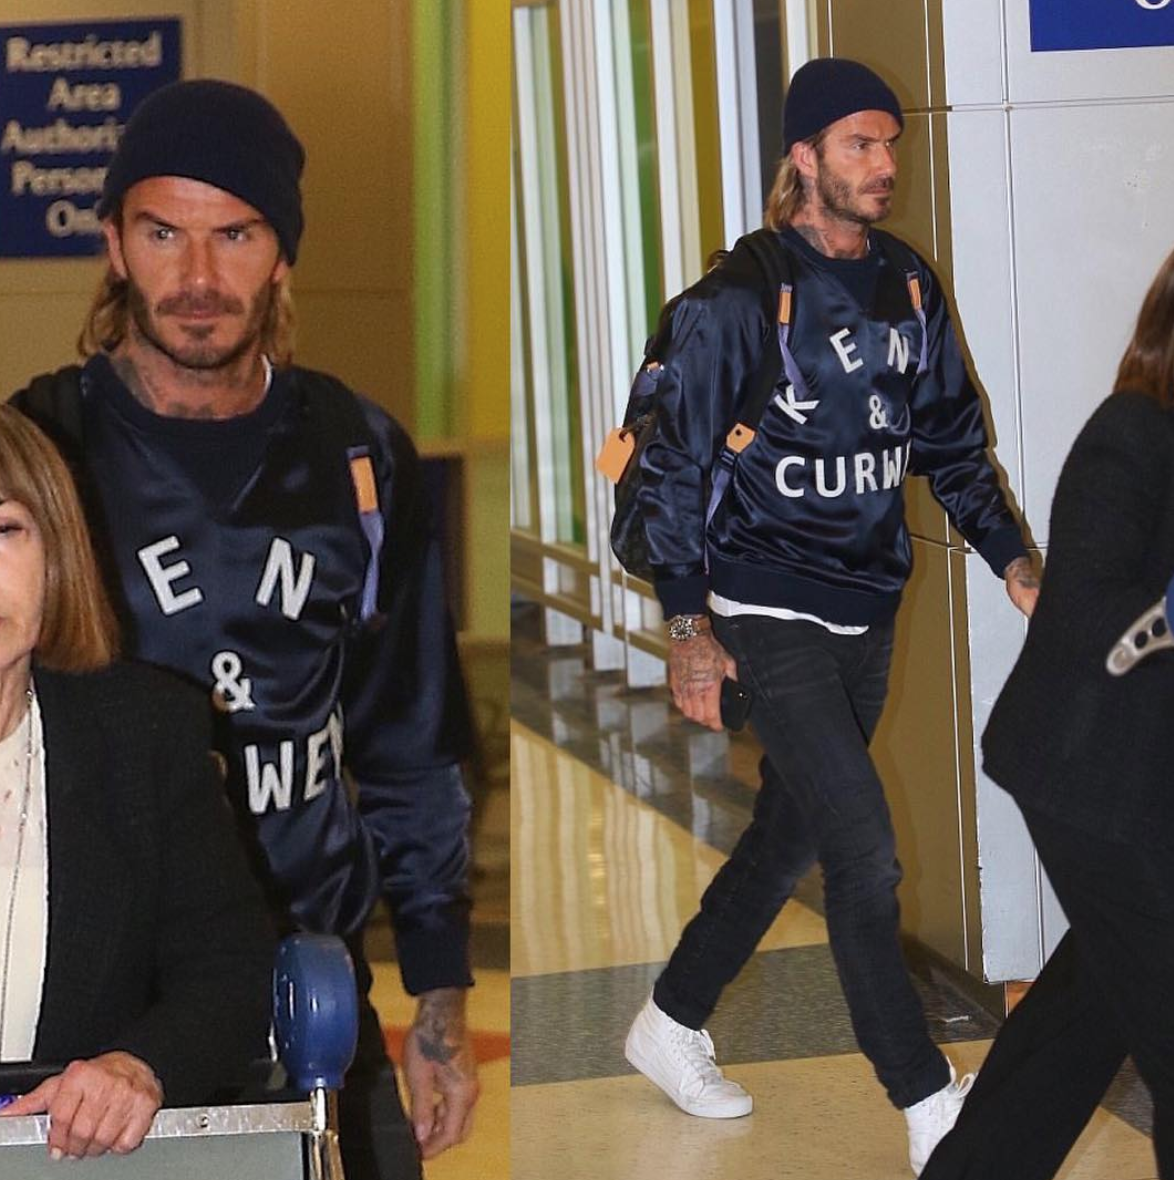 SPOTTED: David Beckham In Kent & Curwen Sweatshirt And Vans Sneakers